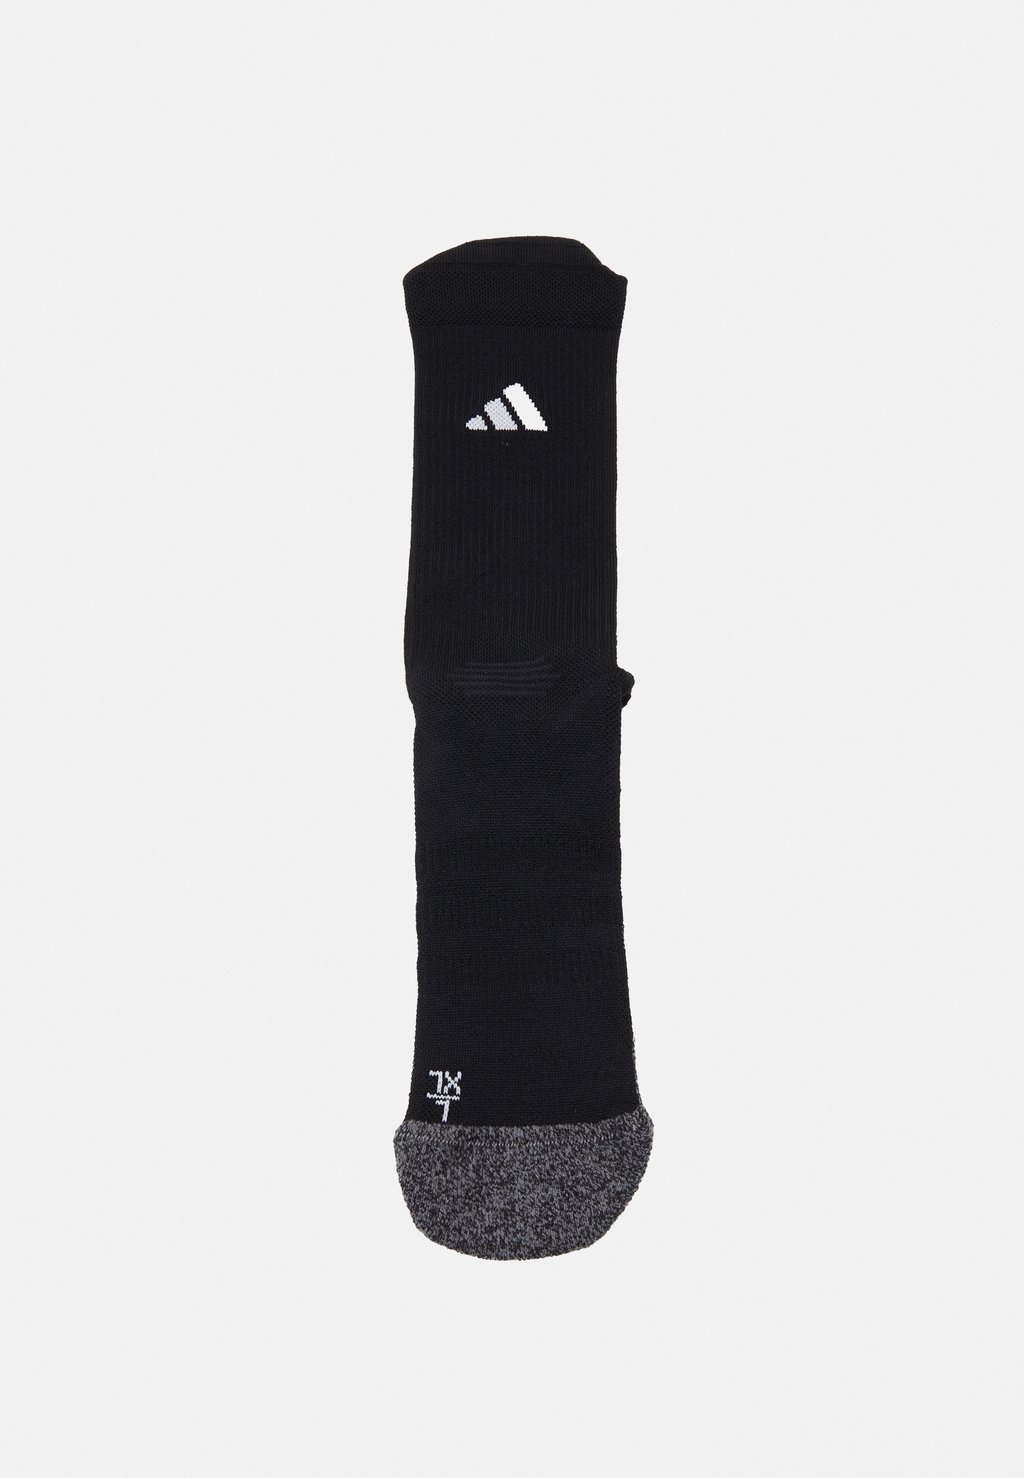 спортивные носки cush sock unisex adidas цвет white black Спортивные носки Cush Sock Unisex Adidas, цвет black/white